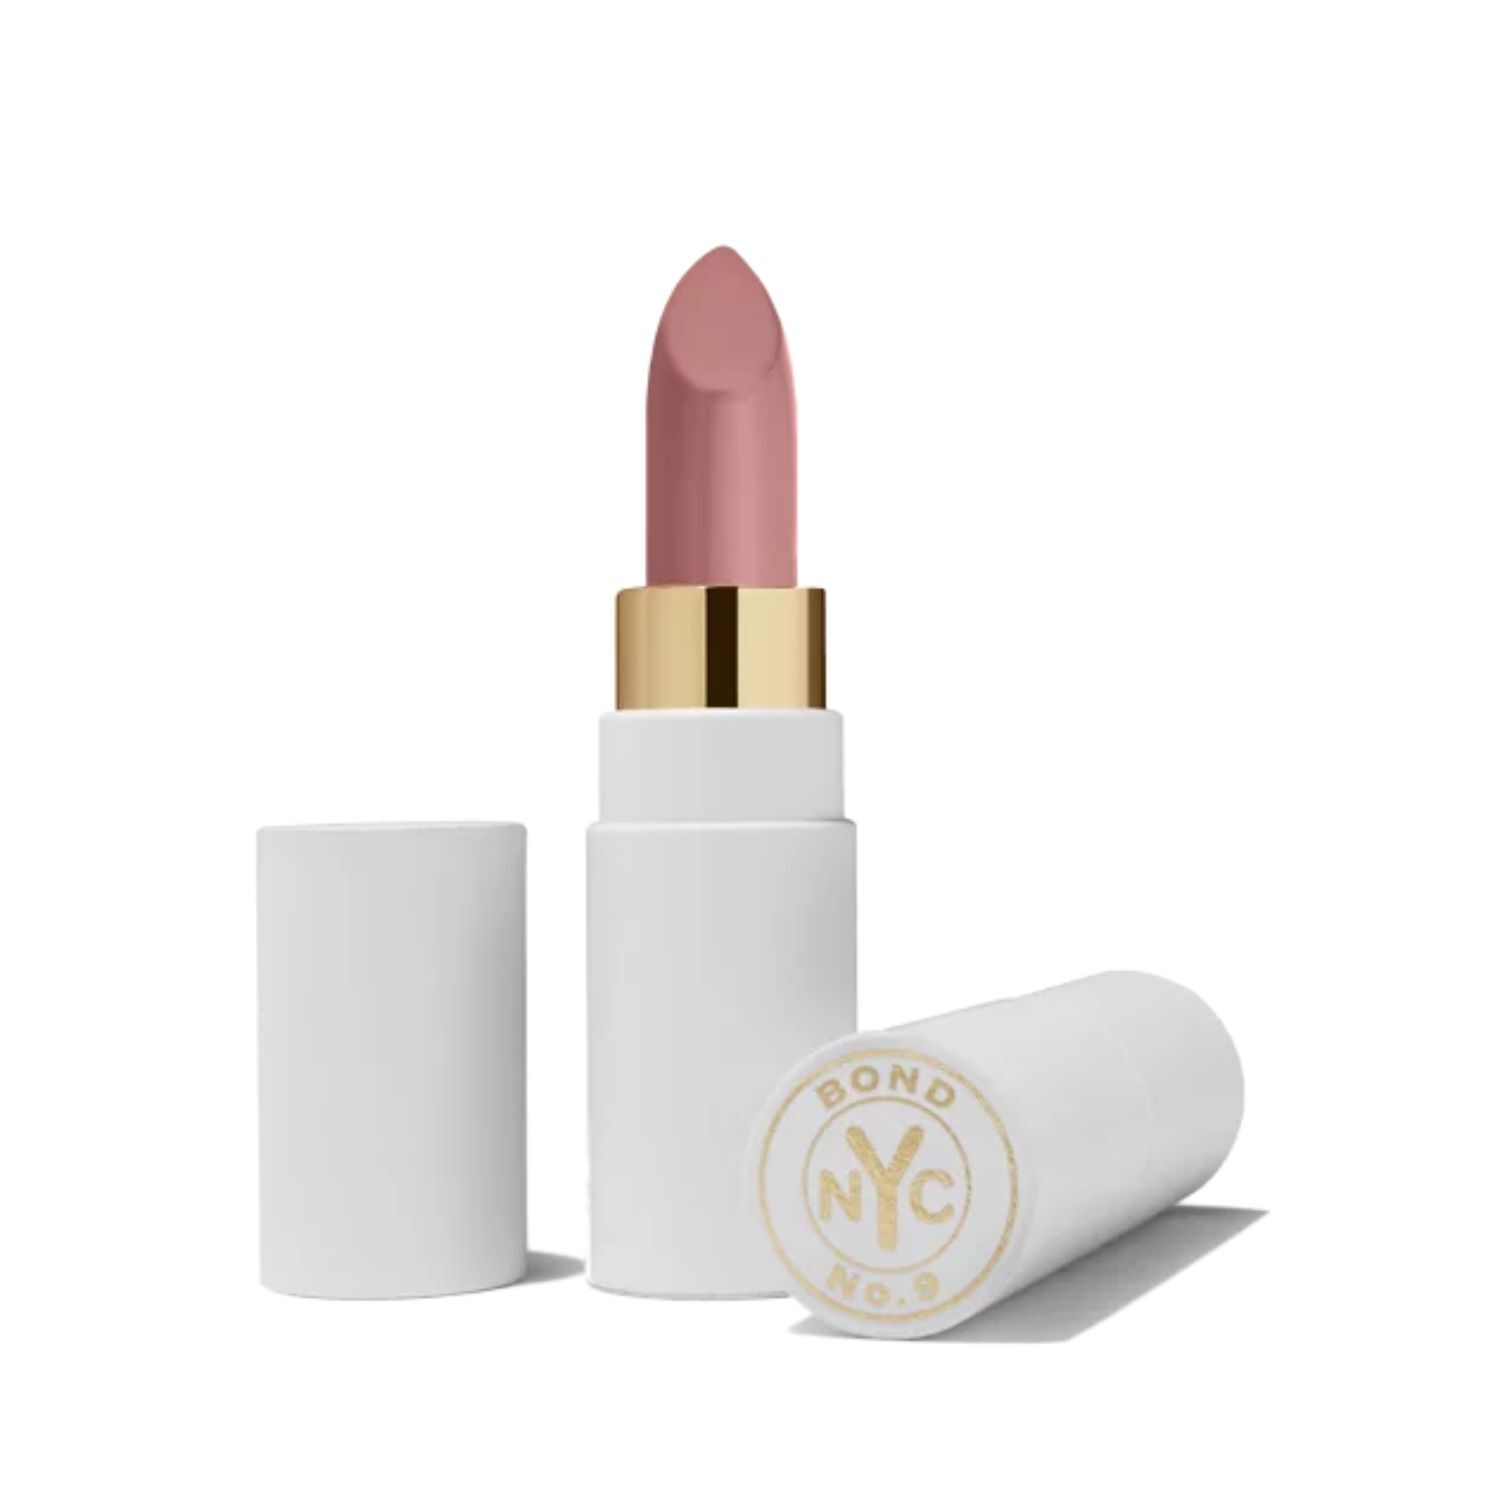 Bond No.9 Hudson Yards Lipstick Refill Unboxed